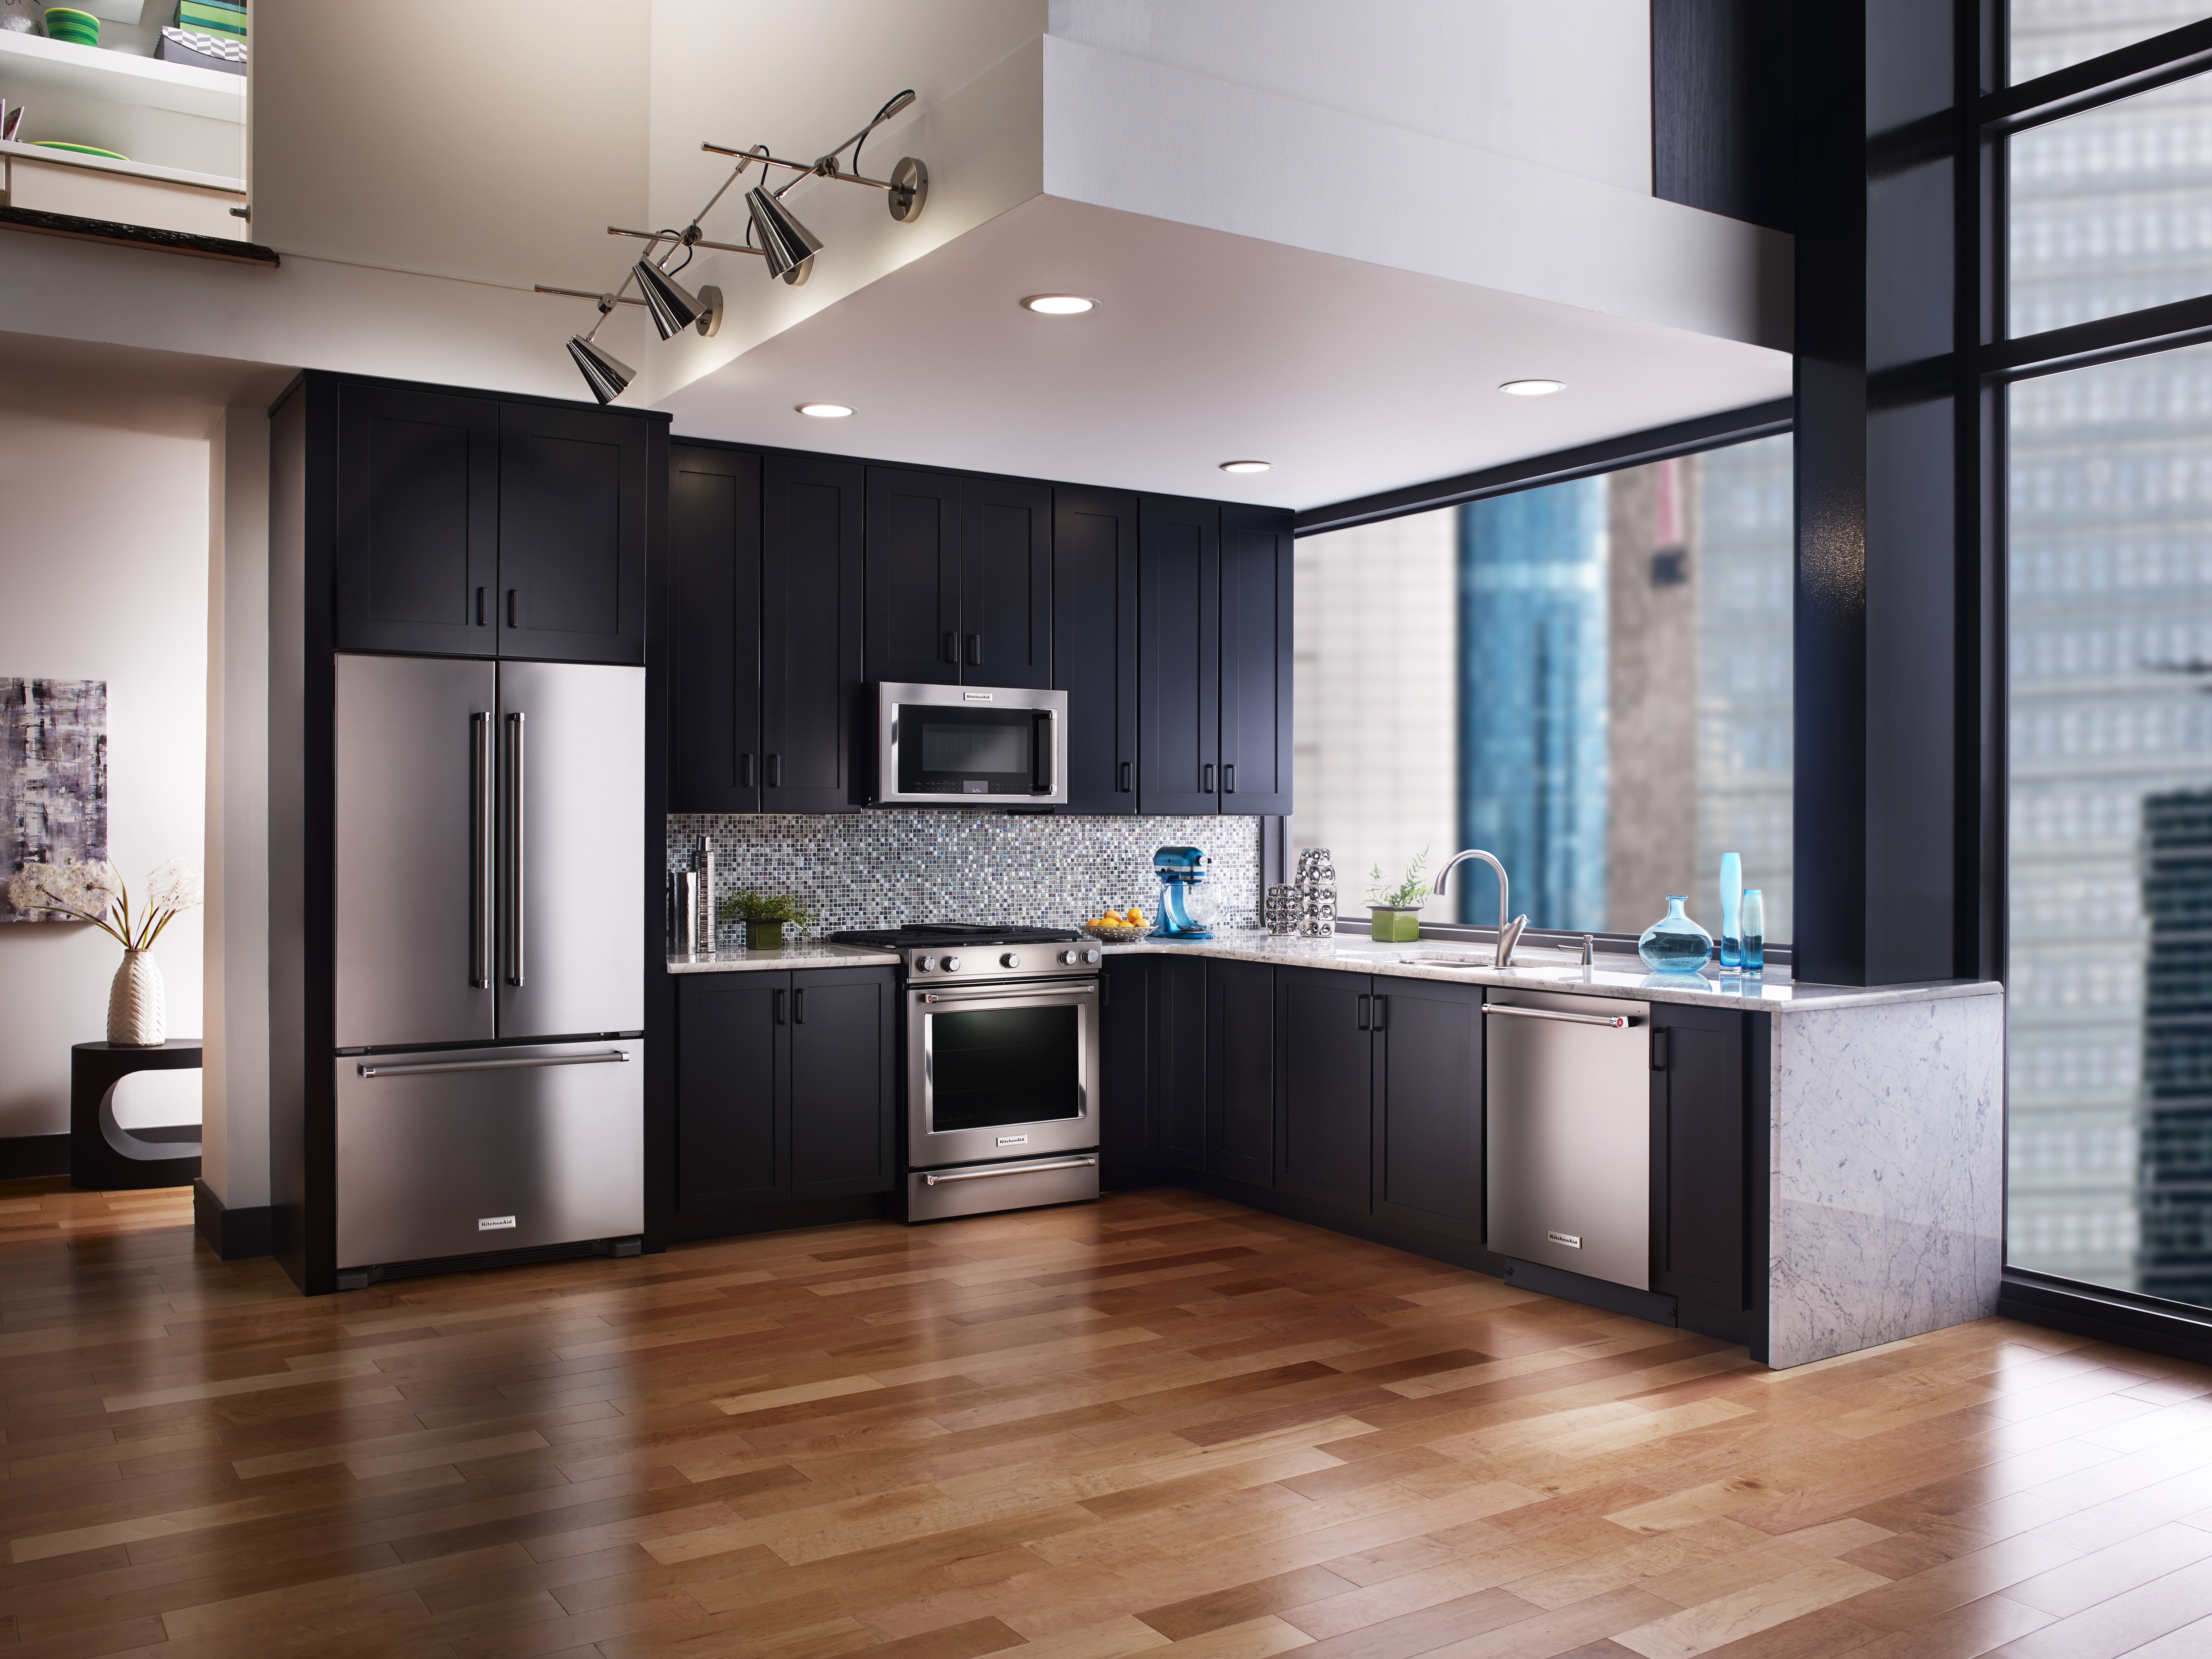 Transform Your Kitchen with KitchenAid Appliances at Best Buy!